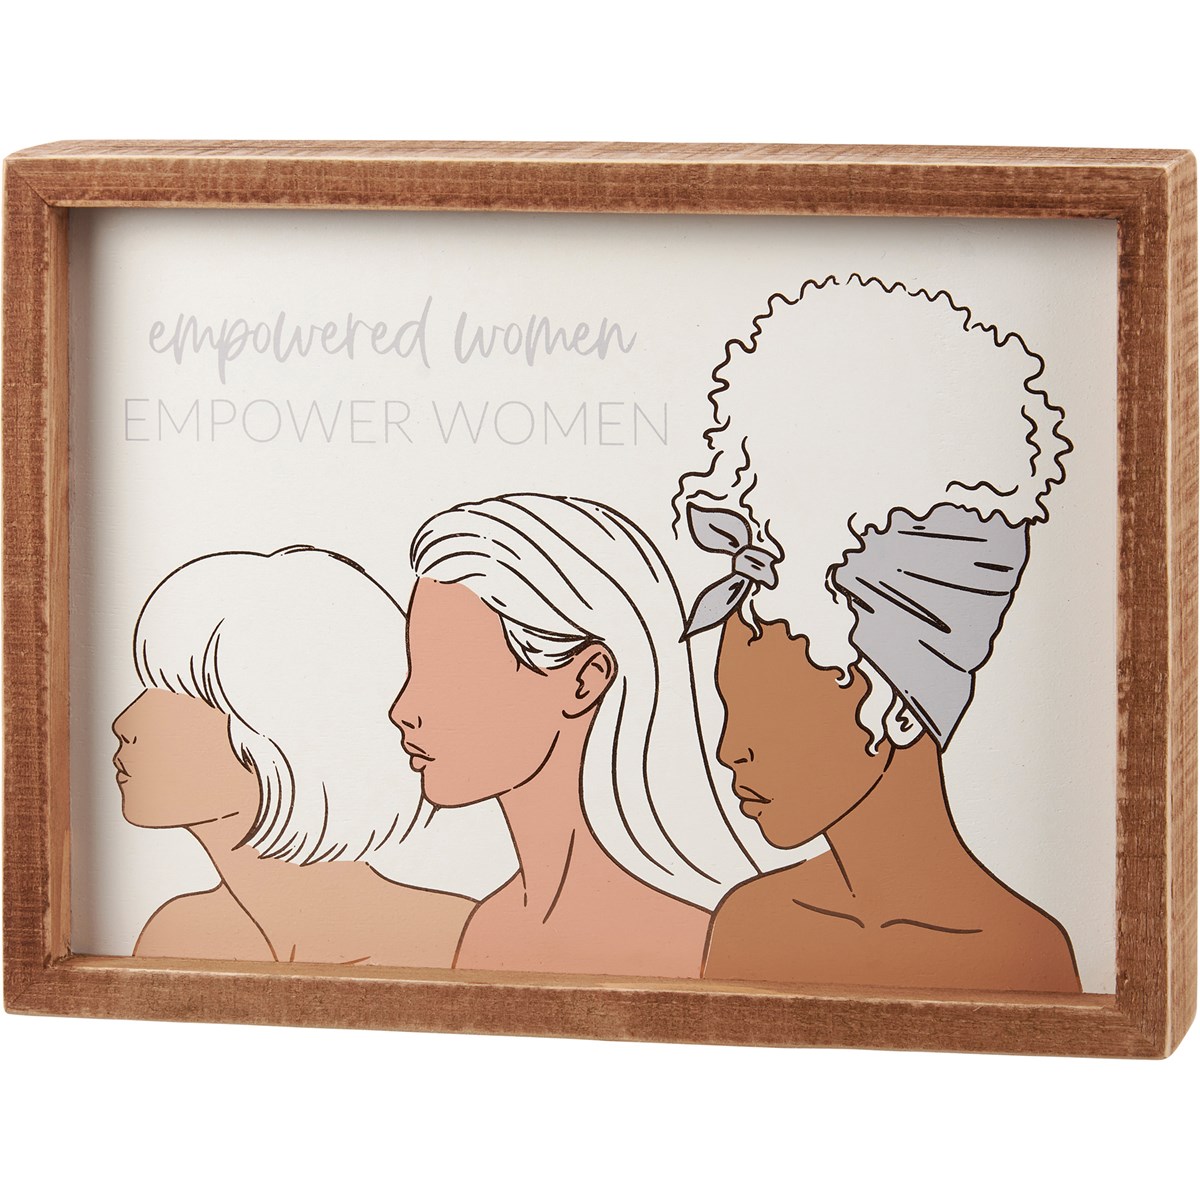 Empower Women Inset Box Sign - Wood